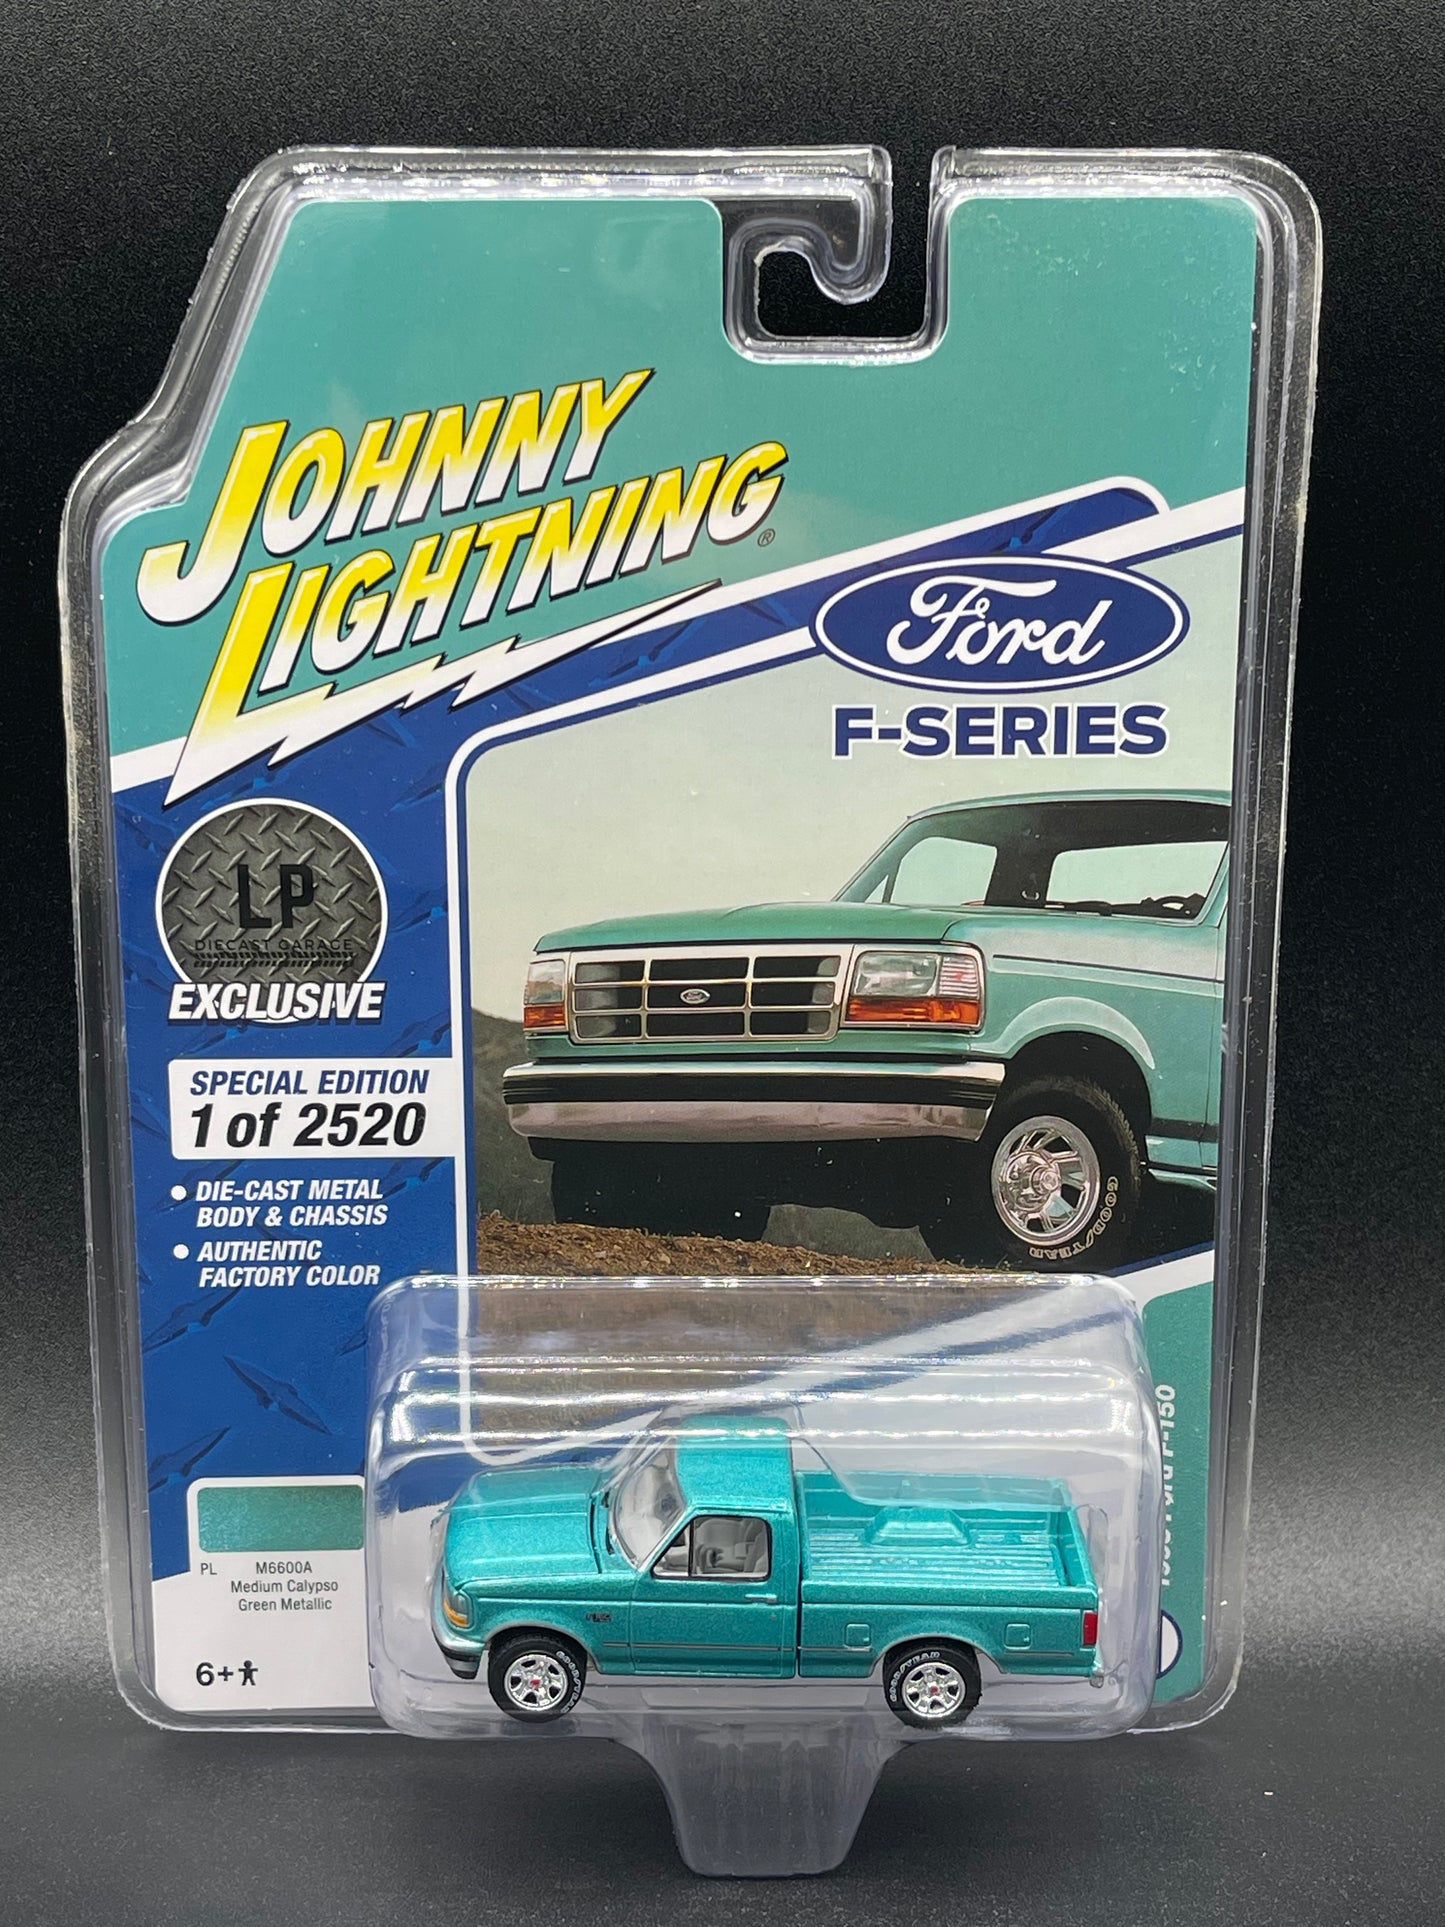 JOHNNY LIGHTNING 1995 Ford F-150 Medium Calypso Green Metallic Pick Up Truck LP Diecast Garage Exclusive Release 1:64 Diecast Promo